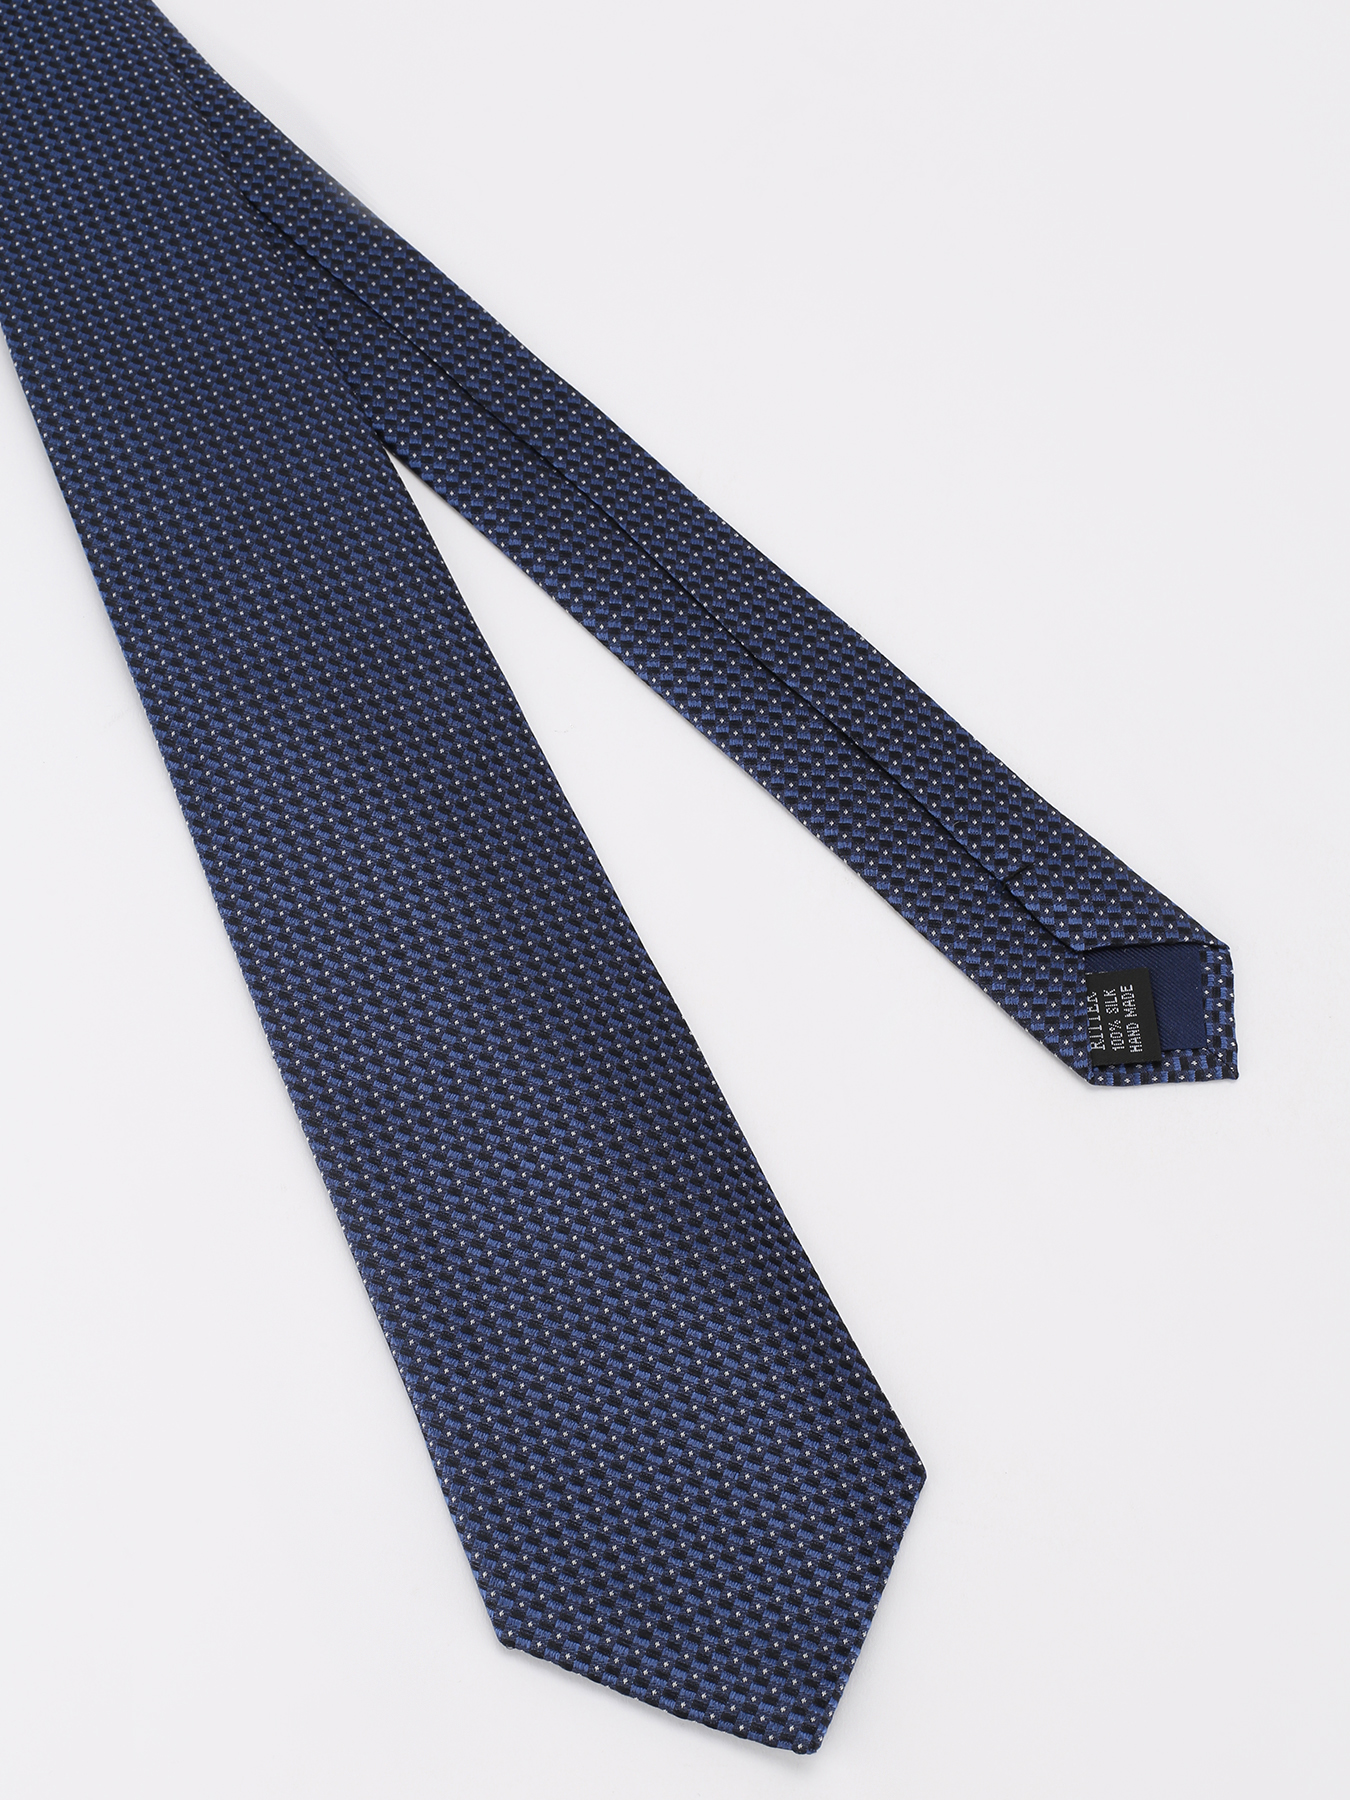 Ritter Шелковый галстук с узорами 323008-185 Фото 3